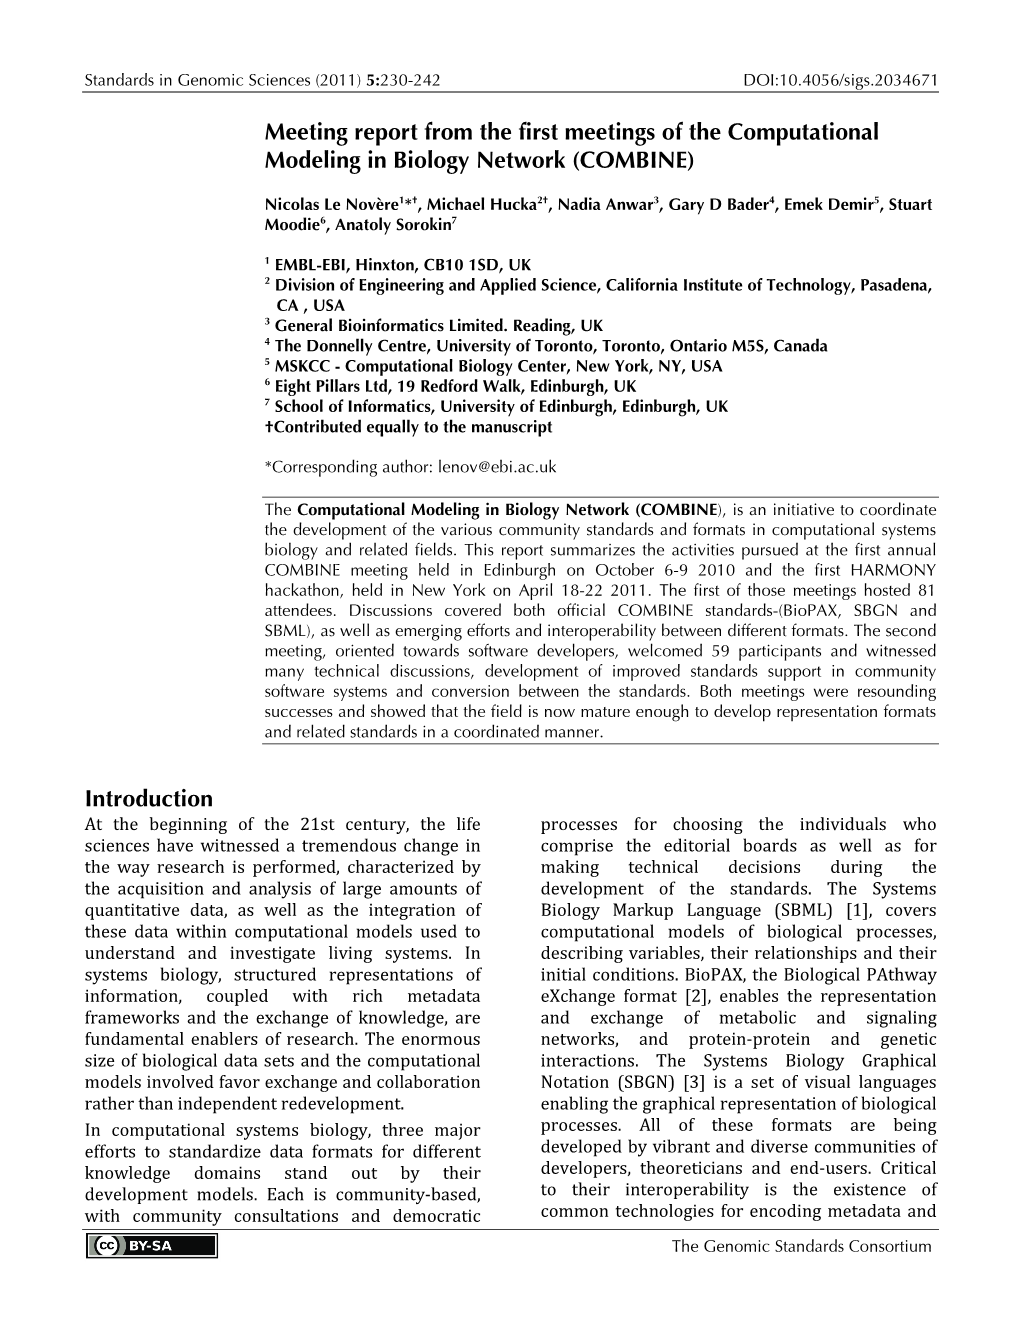 Computational Modeling in Biology Network (COMBINE)